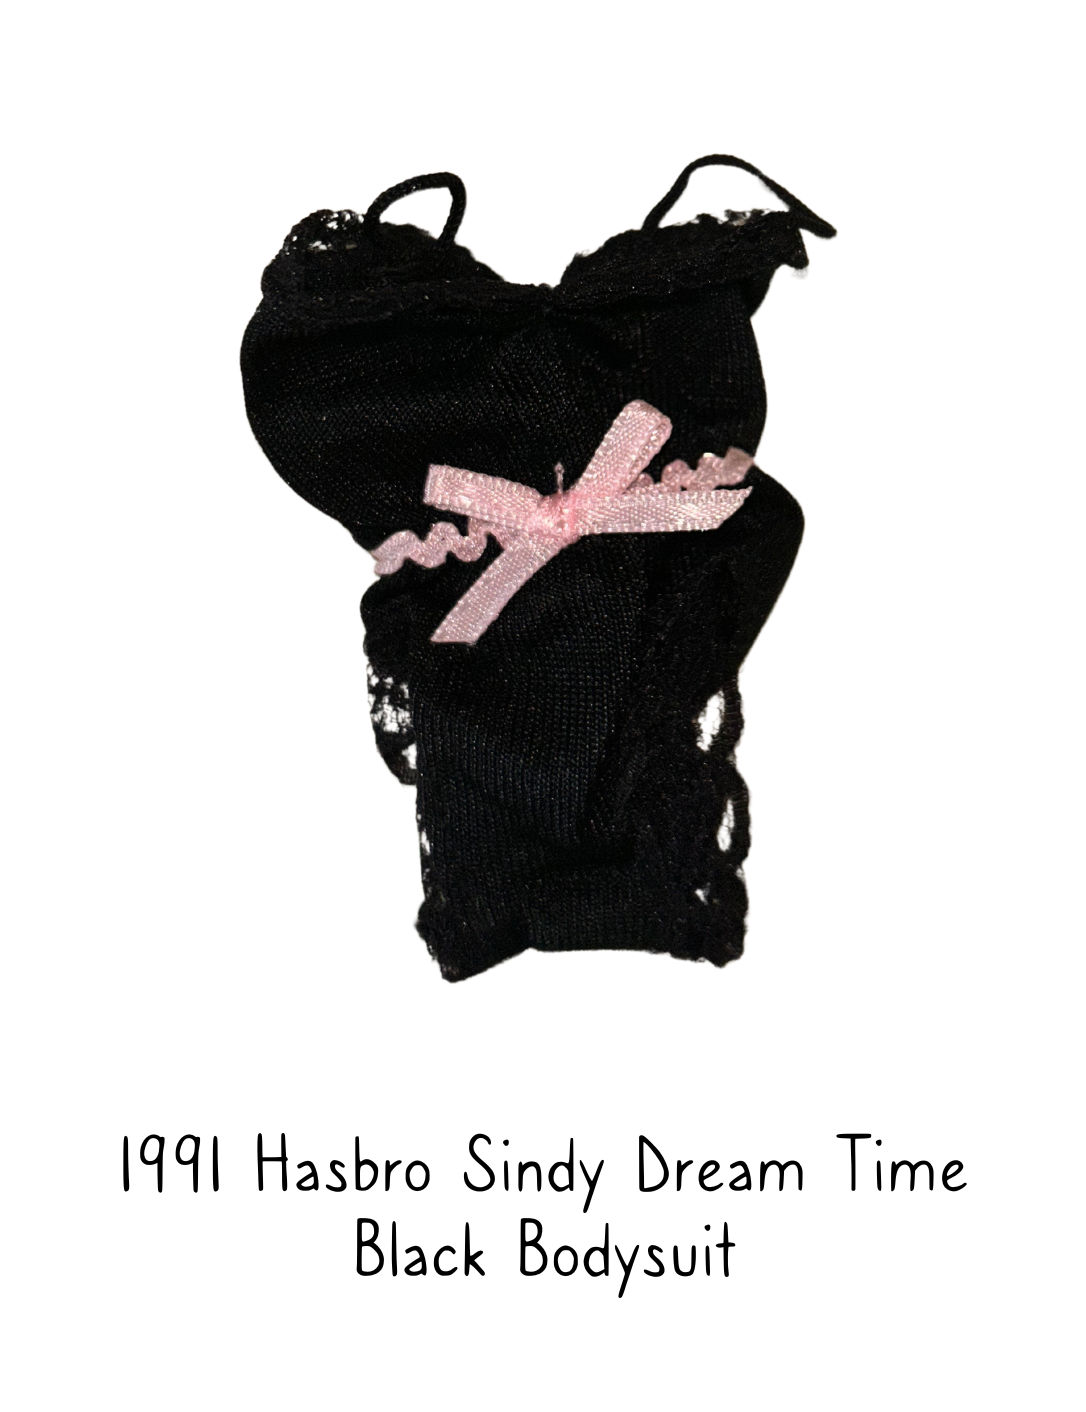 1991 Hasbro Sindy Dream Time Lingerie Collection Black Bodysuit